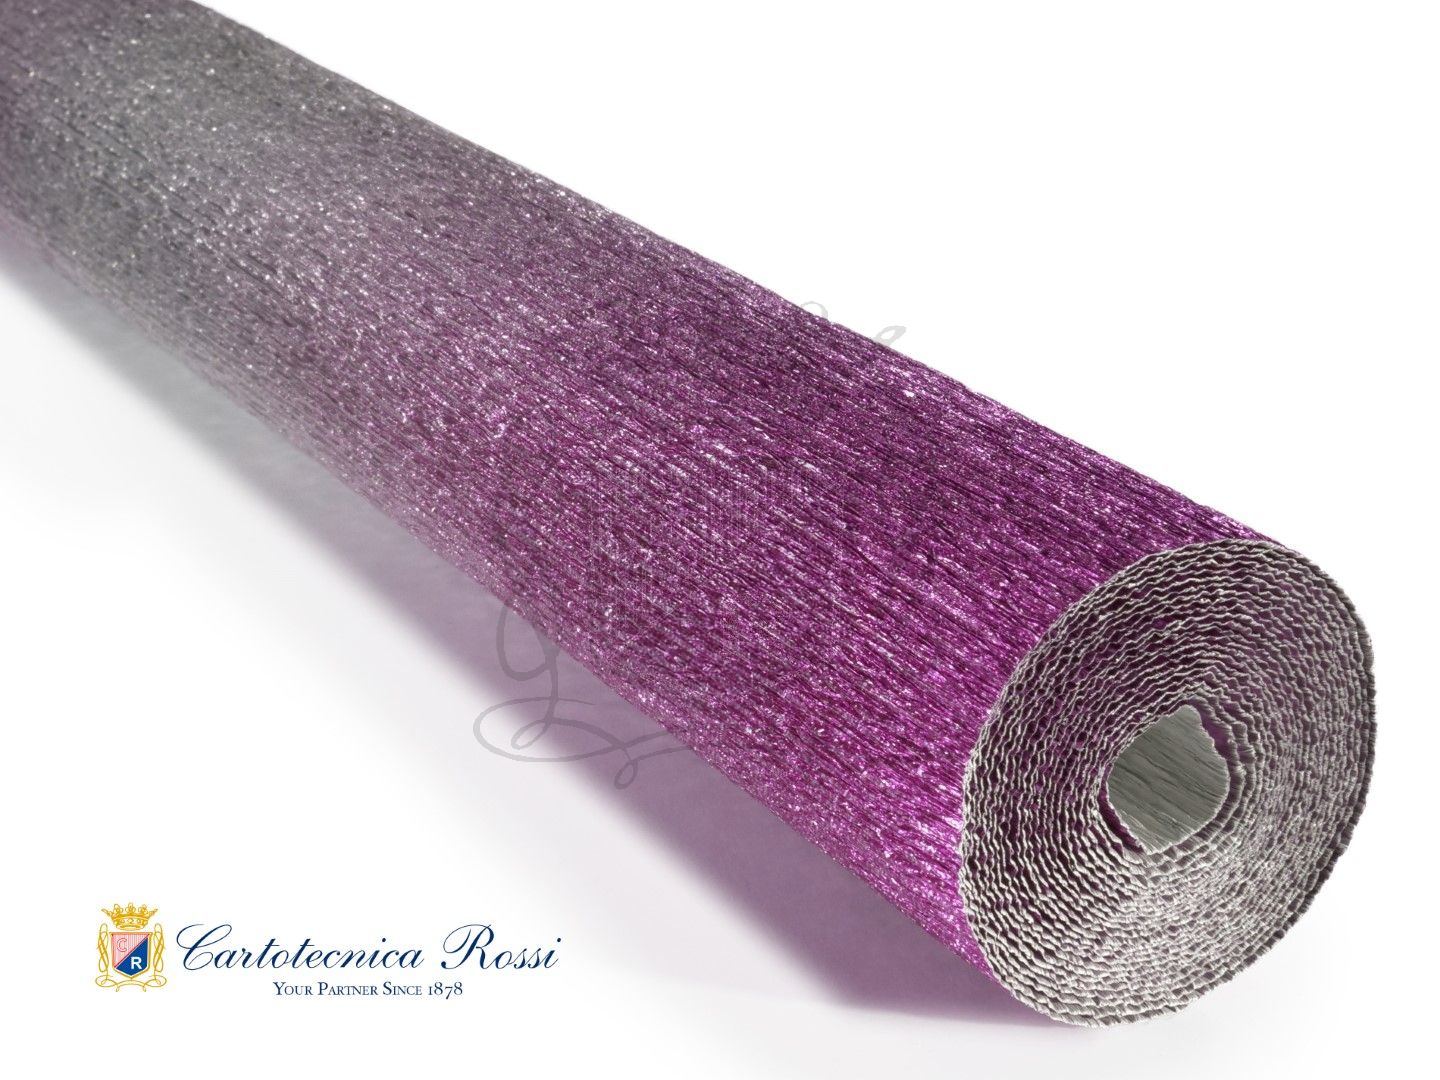 8021 Metalized Nuance Italian Crepe Paper 180g Silver - Fuchsia Purple Gradient